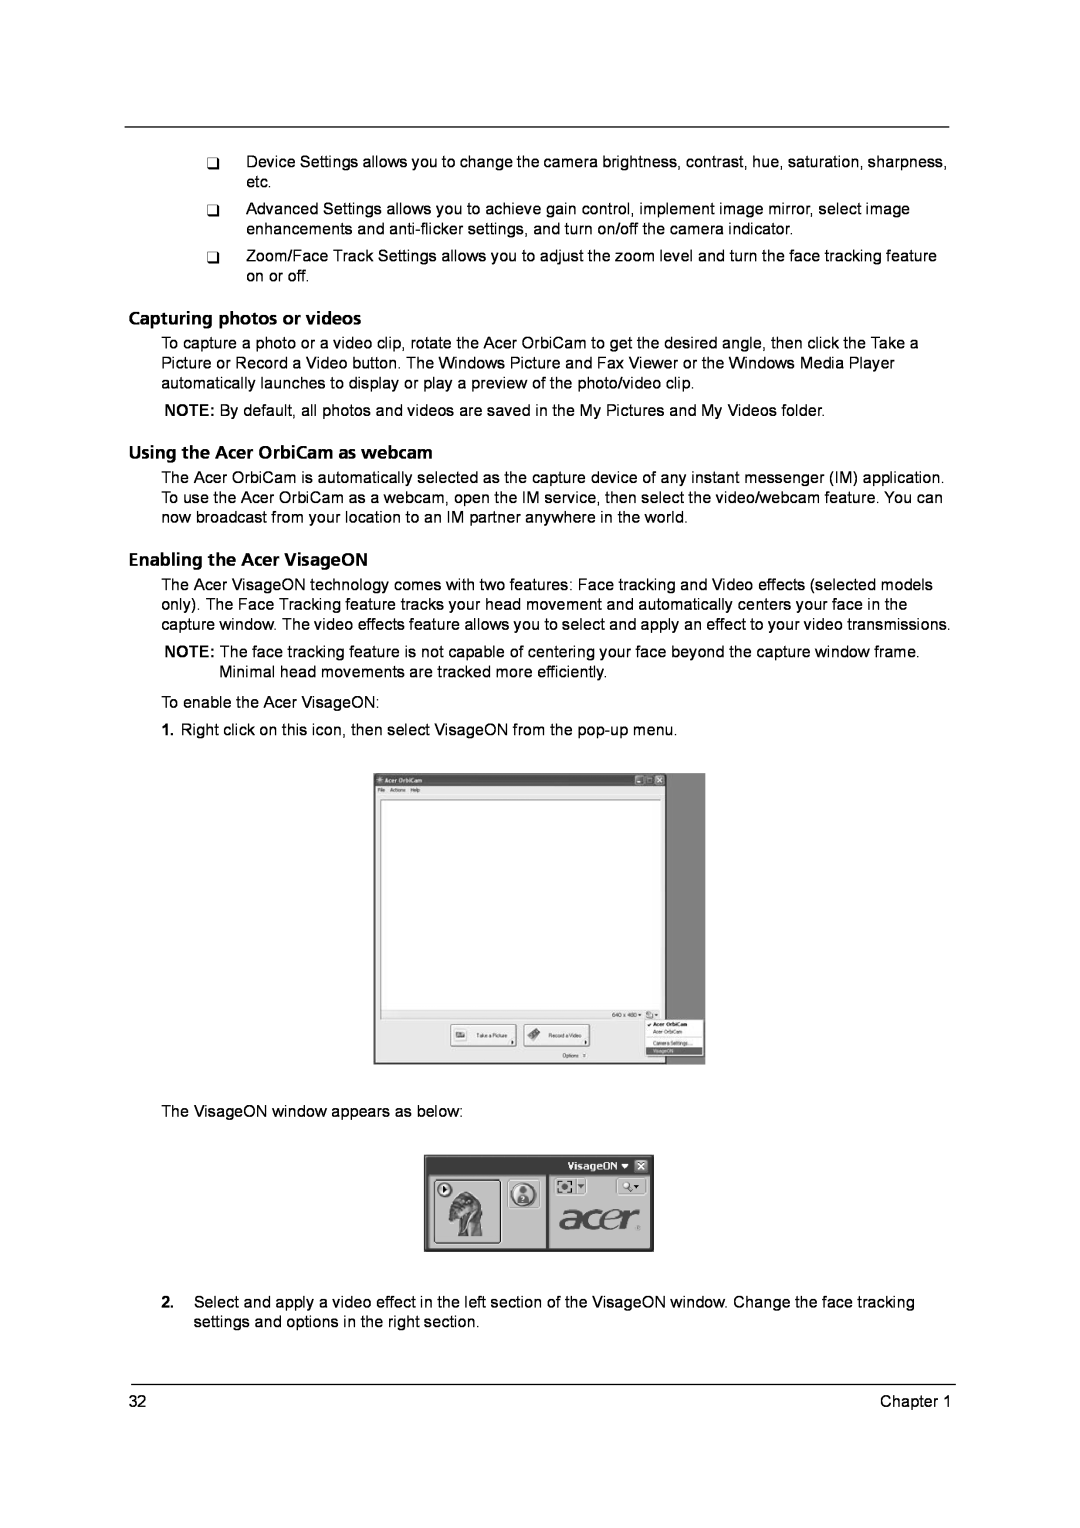 Acer 9800 manual Capturing photos or videos, Using the Acer OrbiCam as webcam, Enabling the Acer VisageON 